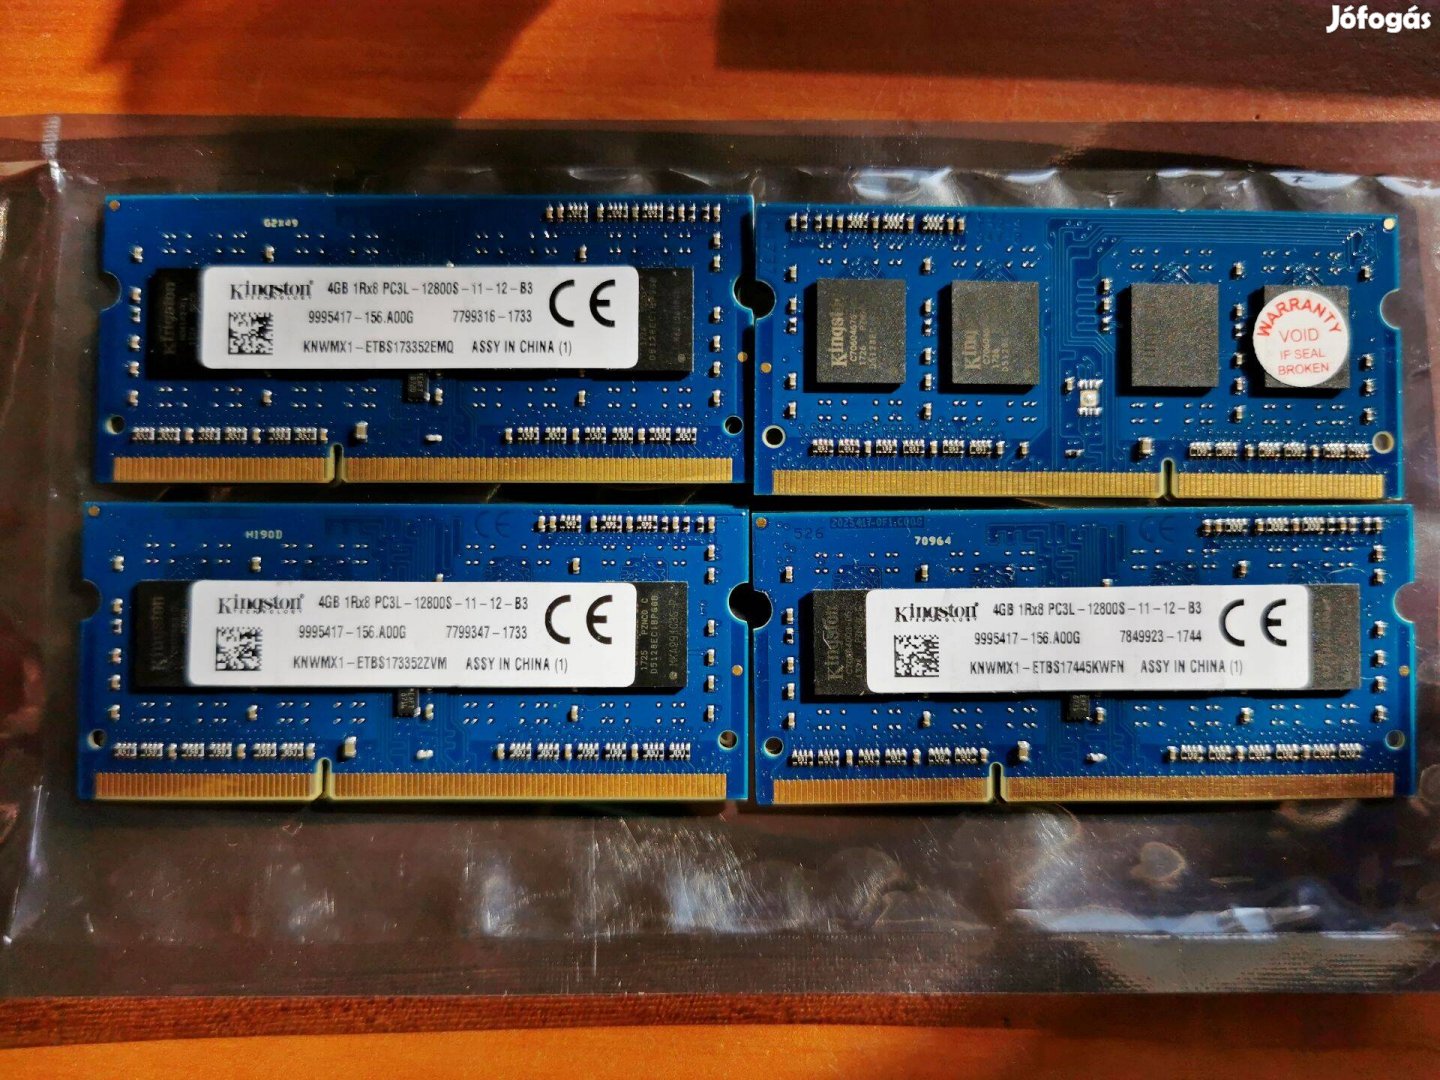 06/3 Kingston Knwmx1-ETB 16GB 3 hónap garancia PC3L DDR3 ram memória